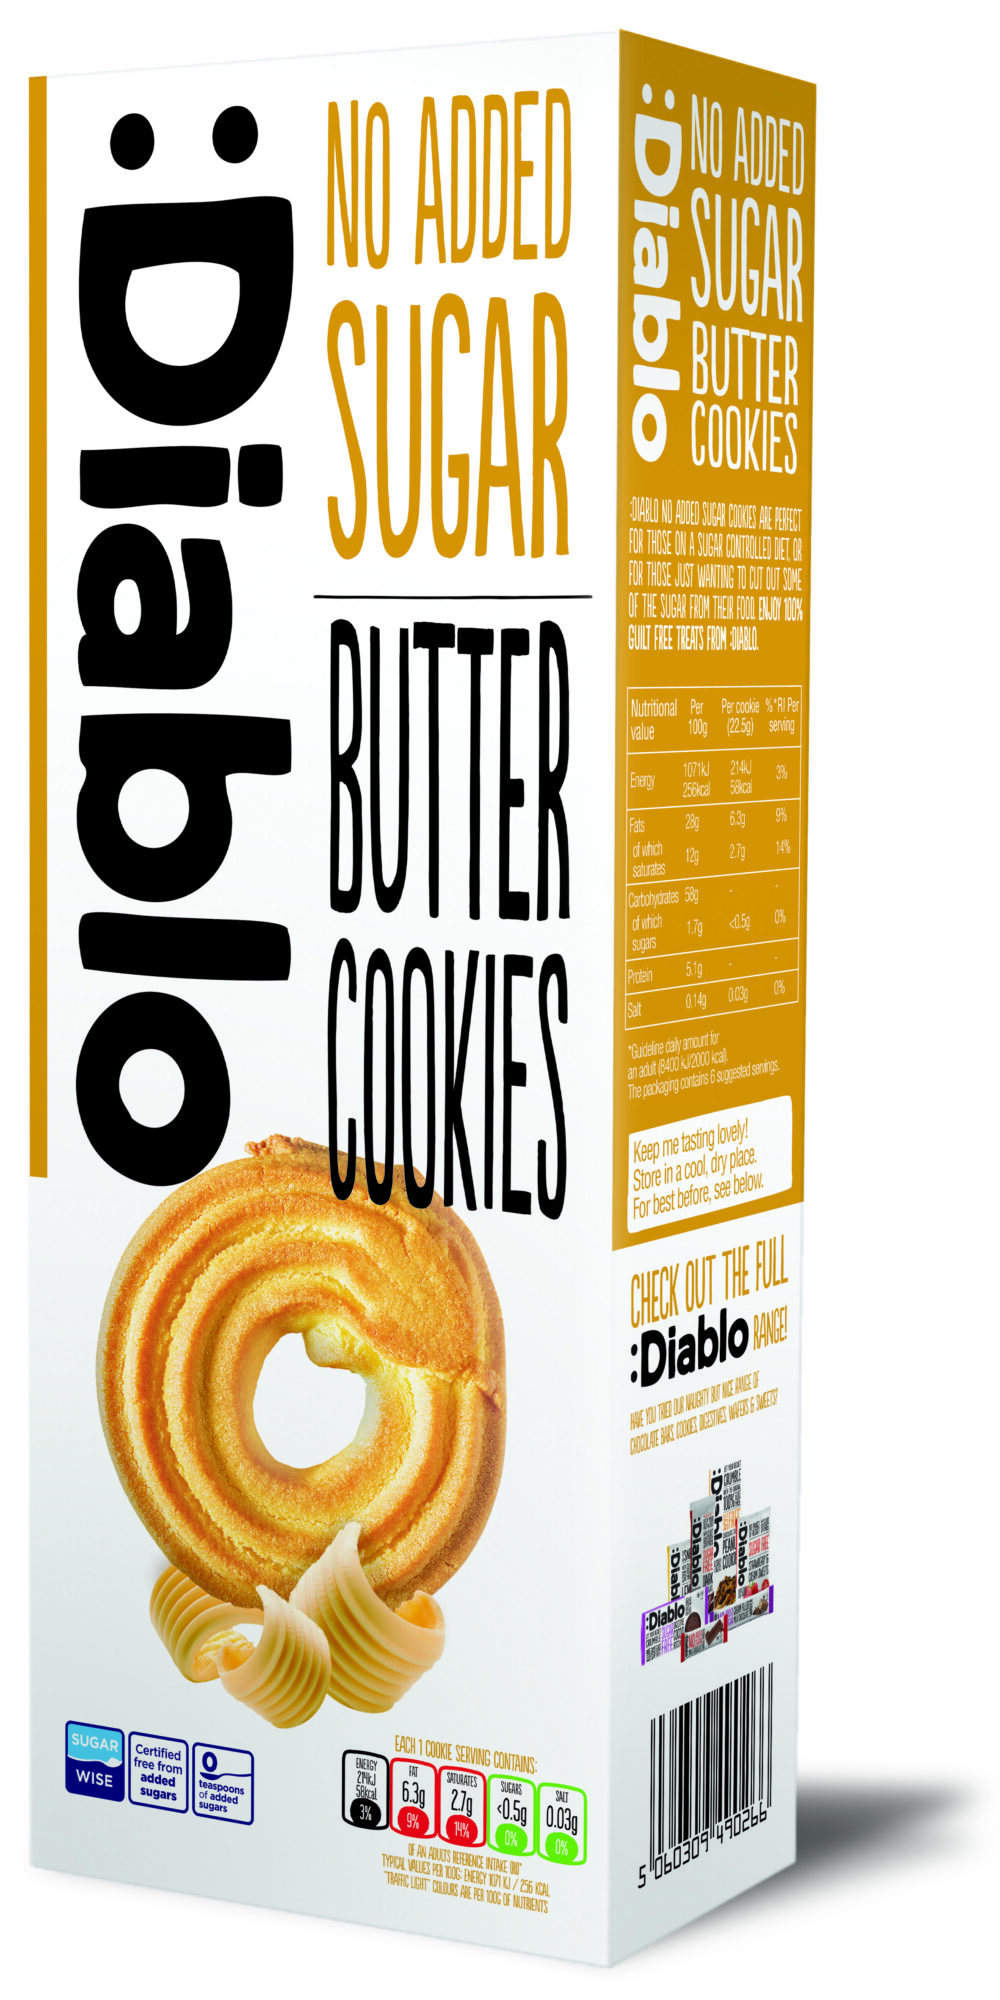 03008AA - New Design Butter Cookies Image